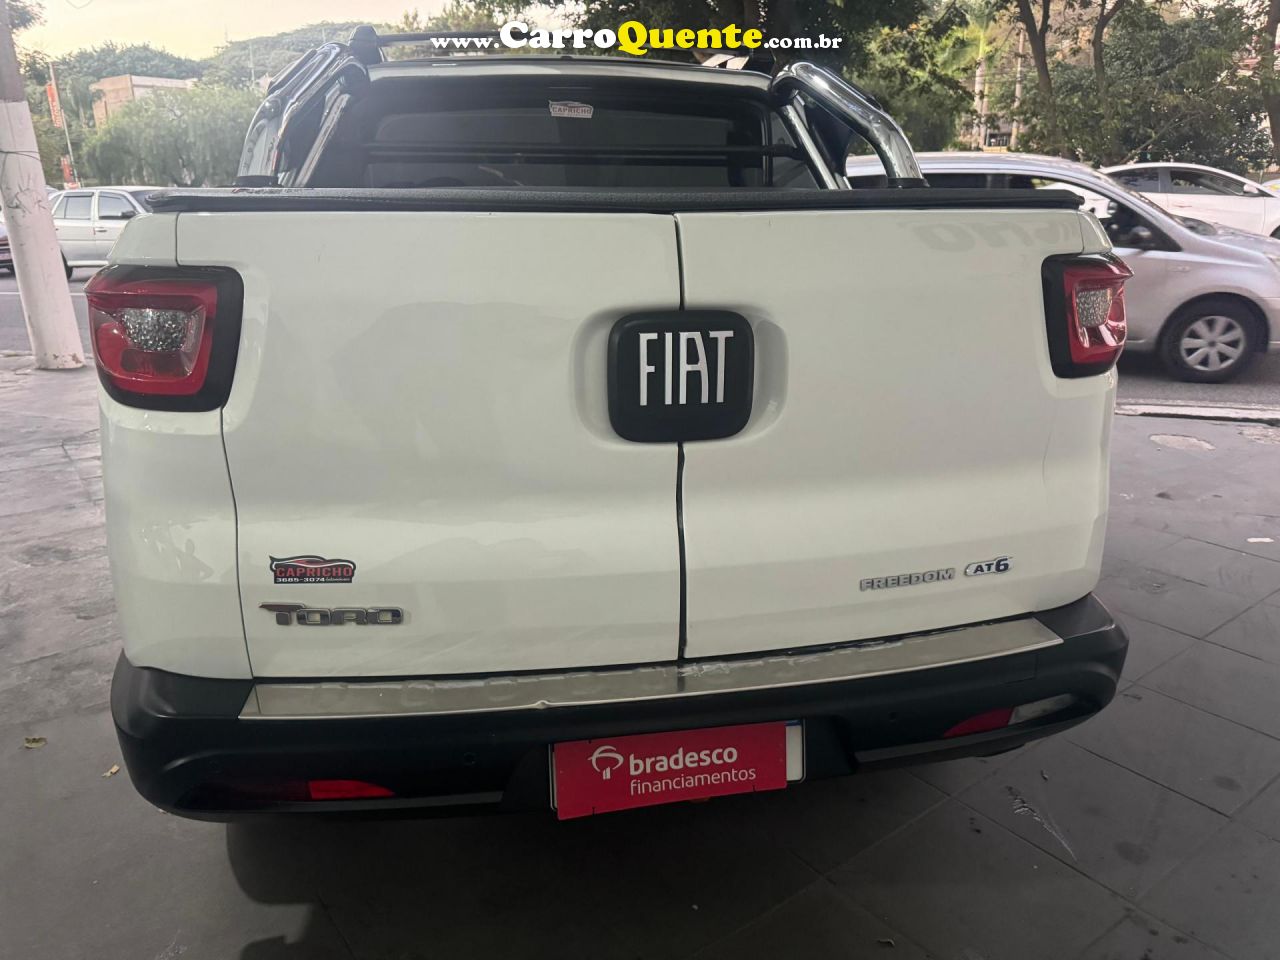 FIAT   TORO FREEDOM 1.8 16V FLEX AUT.   BRANCO 2017 1.8 FLEX - Loja